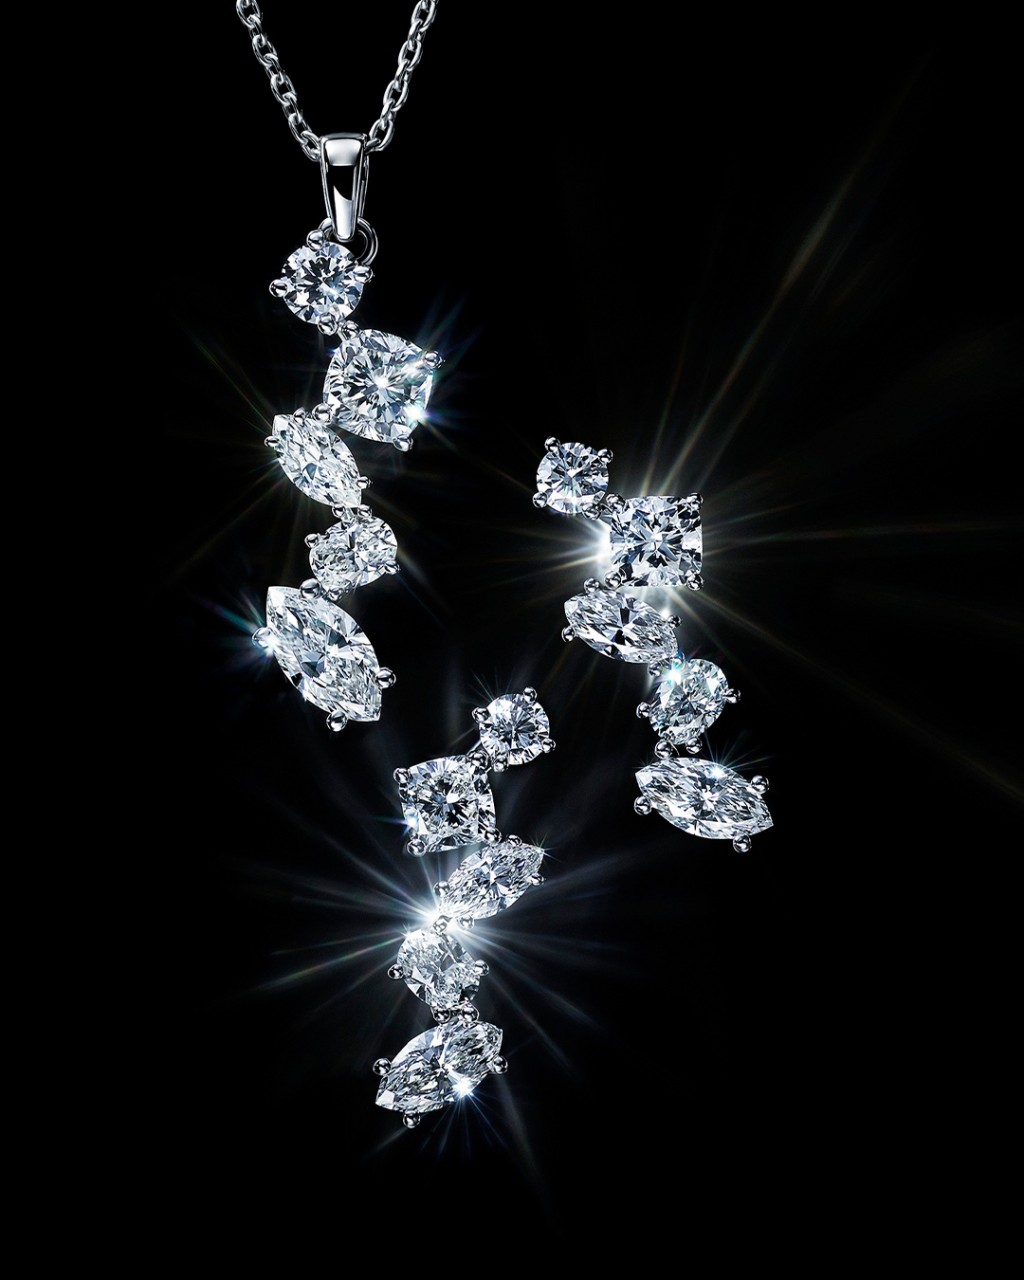 Swarovski Created Diamonds Galaxy系列项链（$17,000）及耳环（$17,000），以不同切割的实验室培育钻石拼凑成闪烁银河。